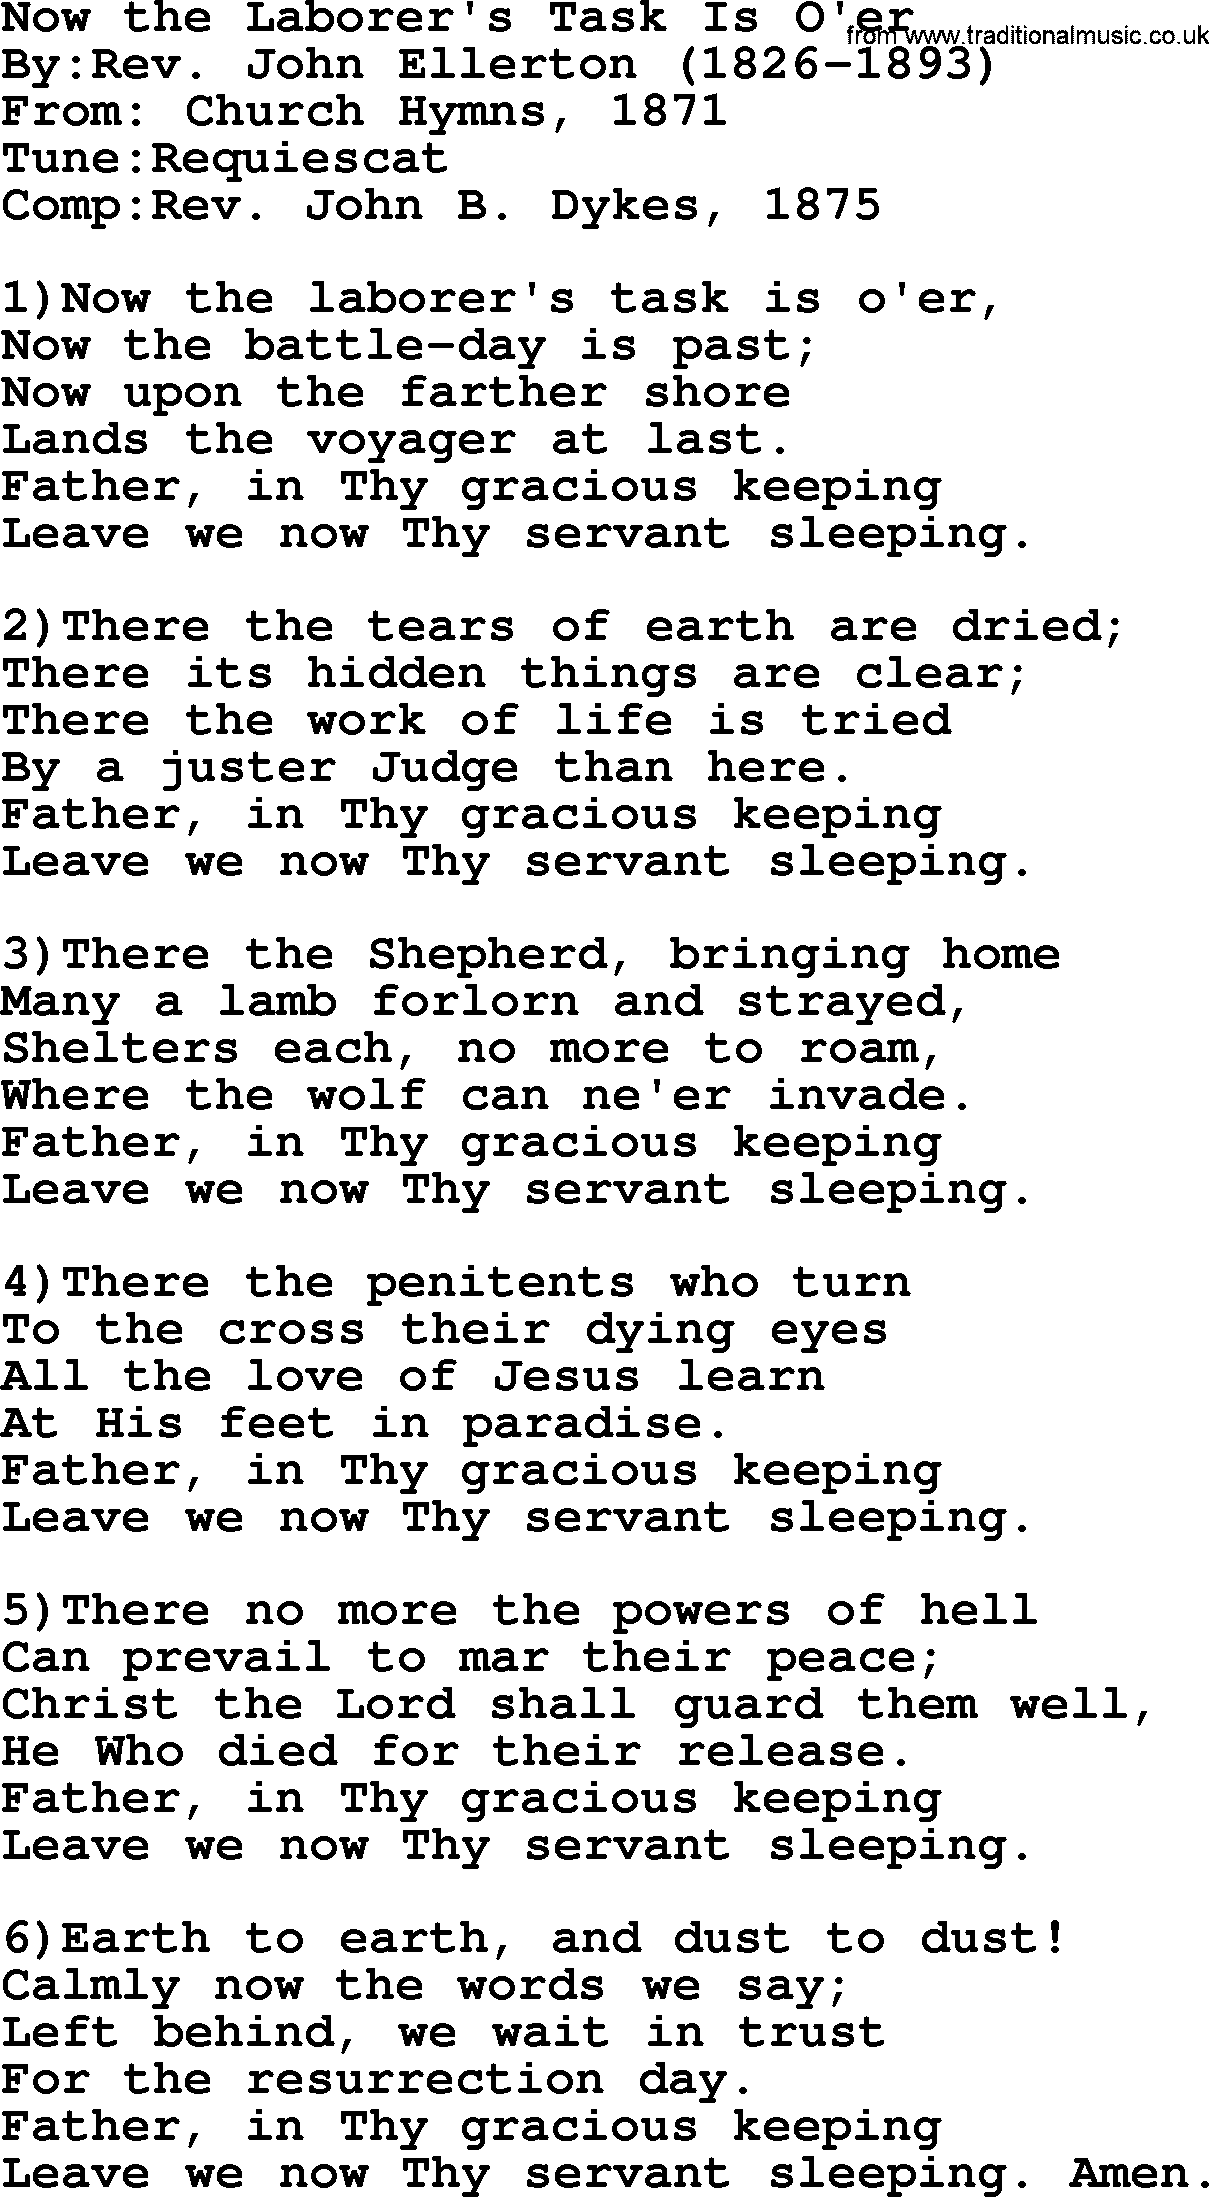 Methodist Hymn: Now The Laborer's Task Is O'er, lyrics